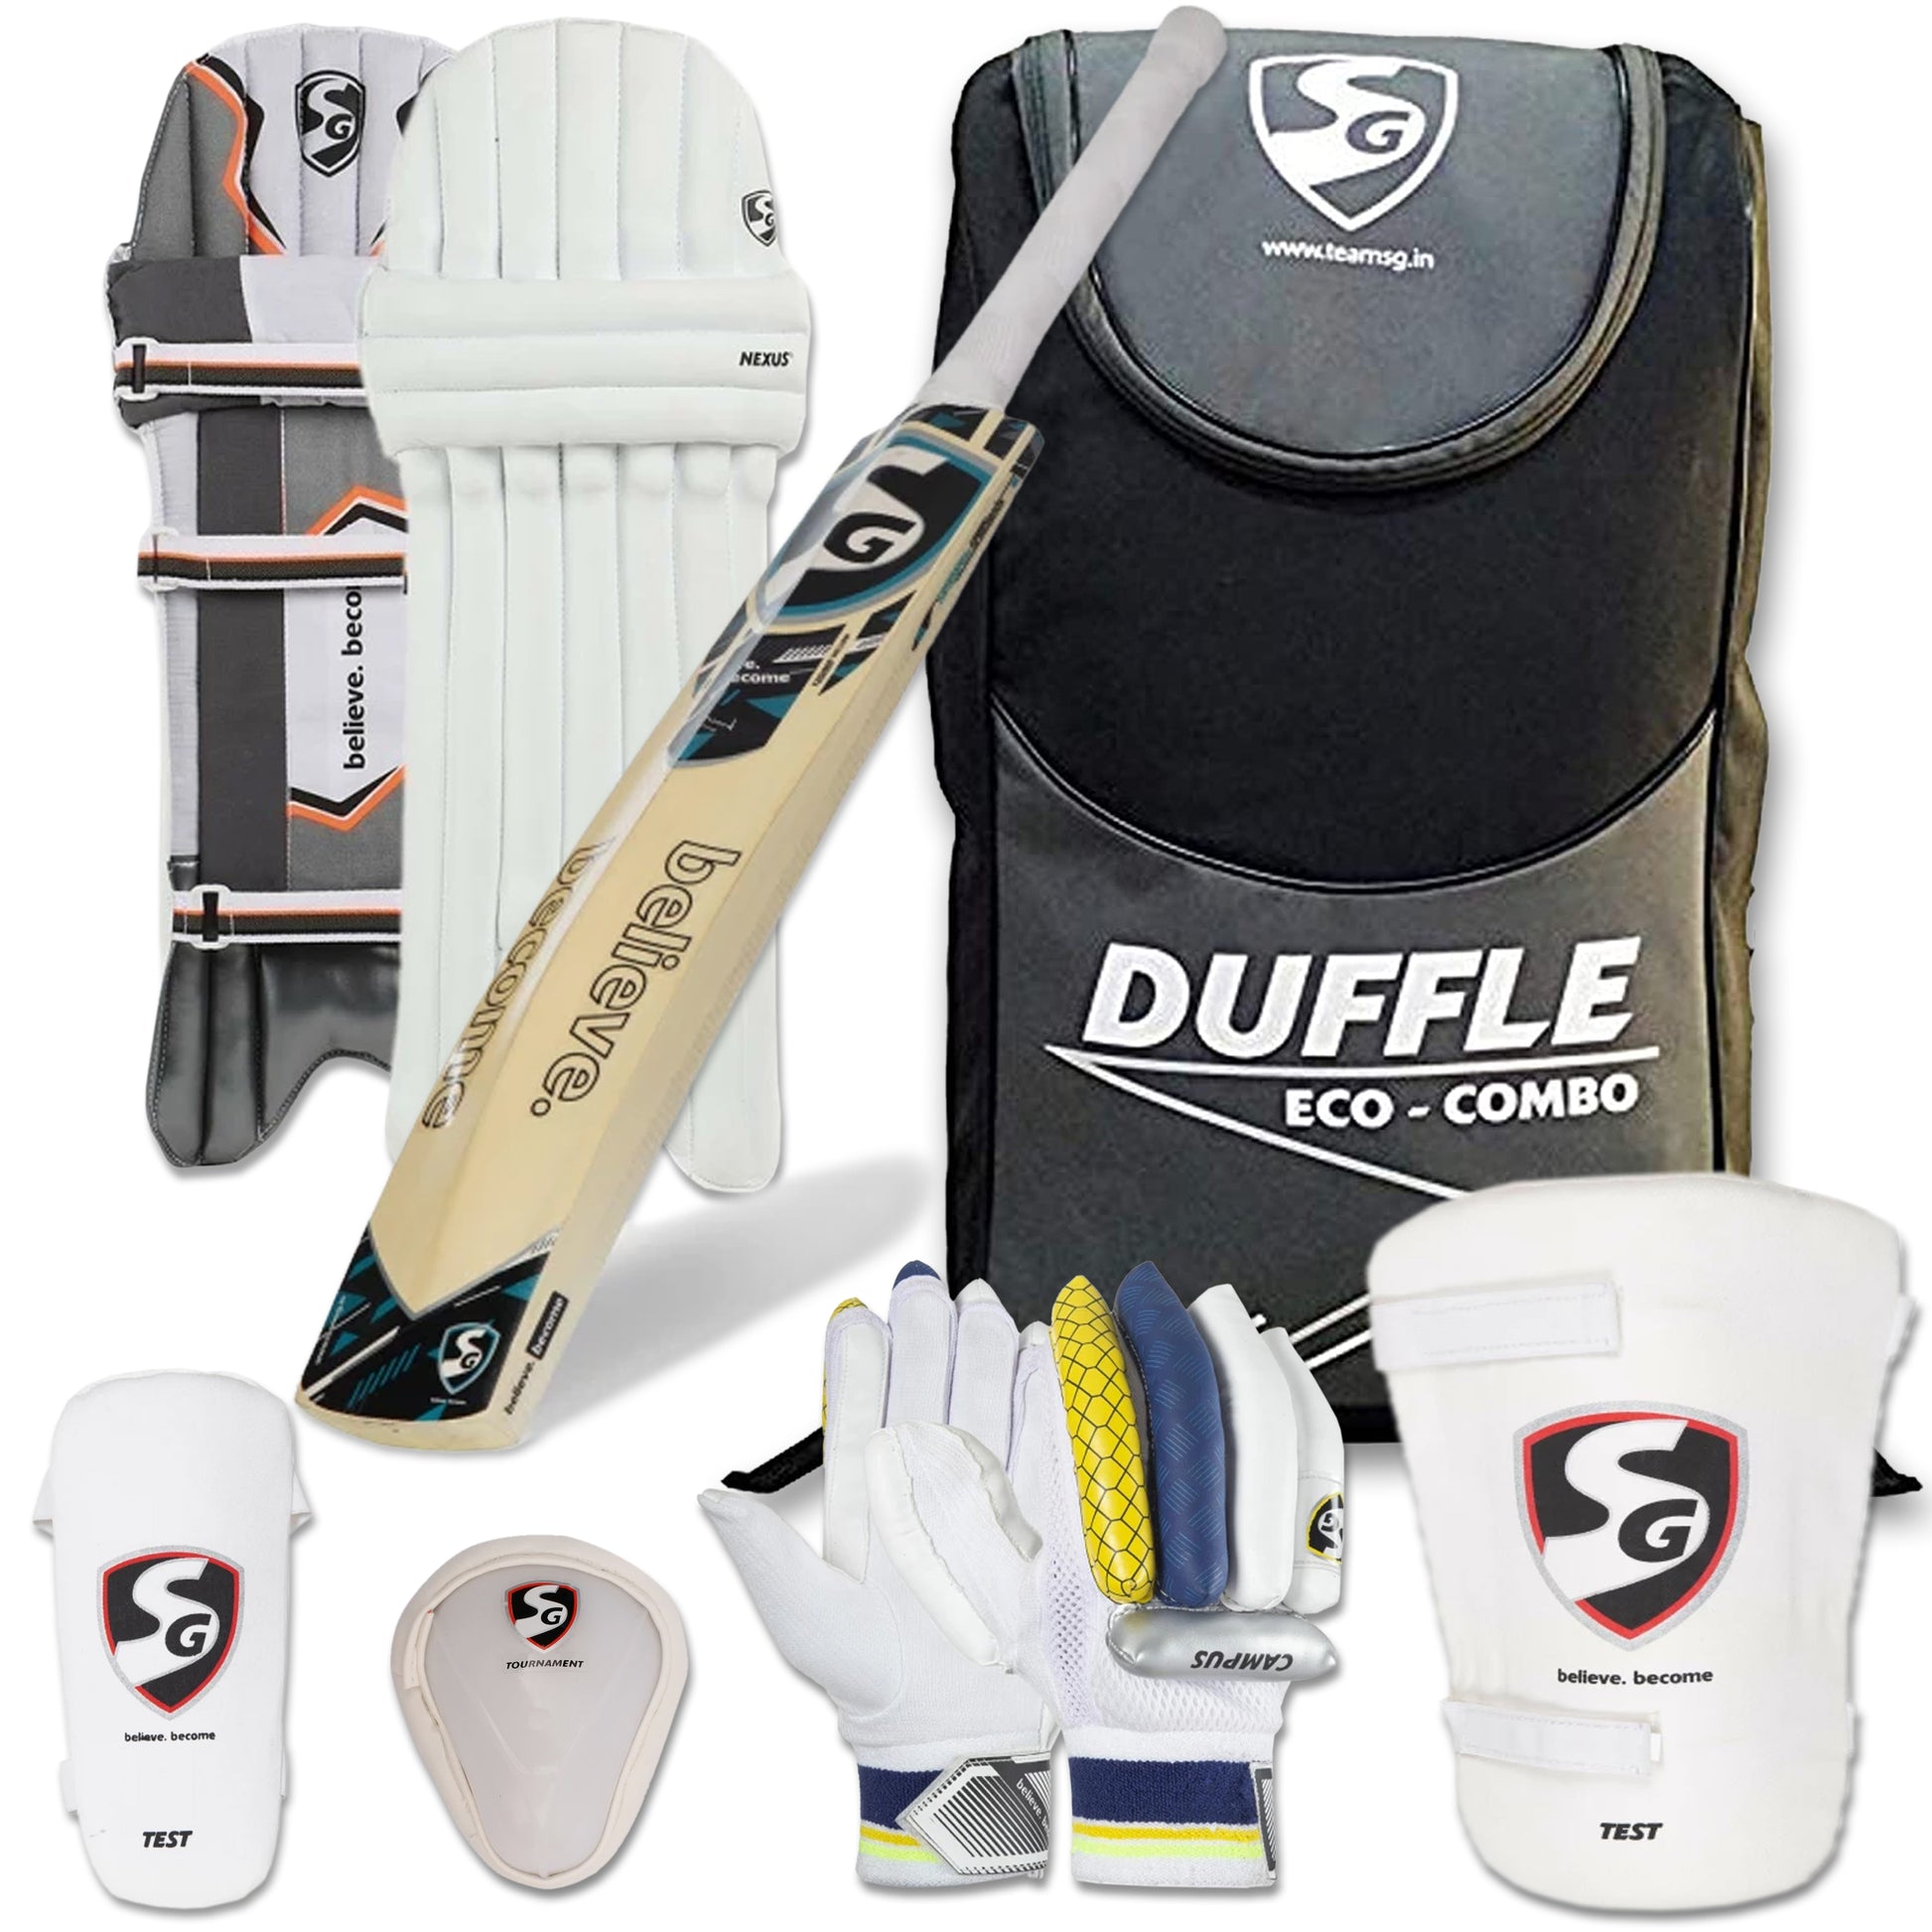 SG Eco Duffle Kashmir Willow Full Cricket Kit - Best Price online Prokicksports.com